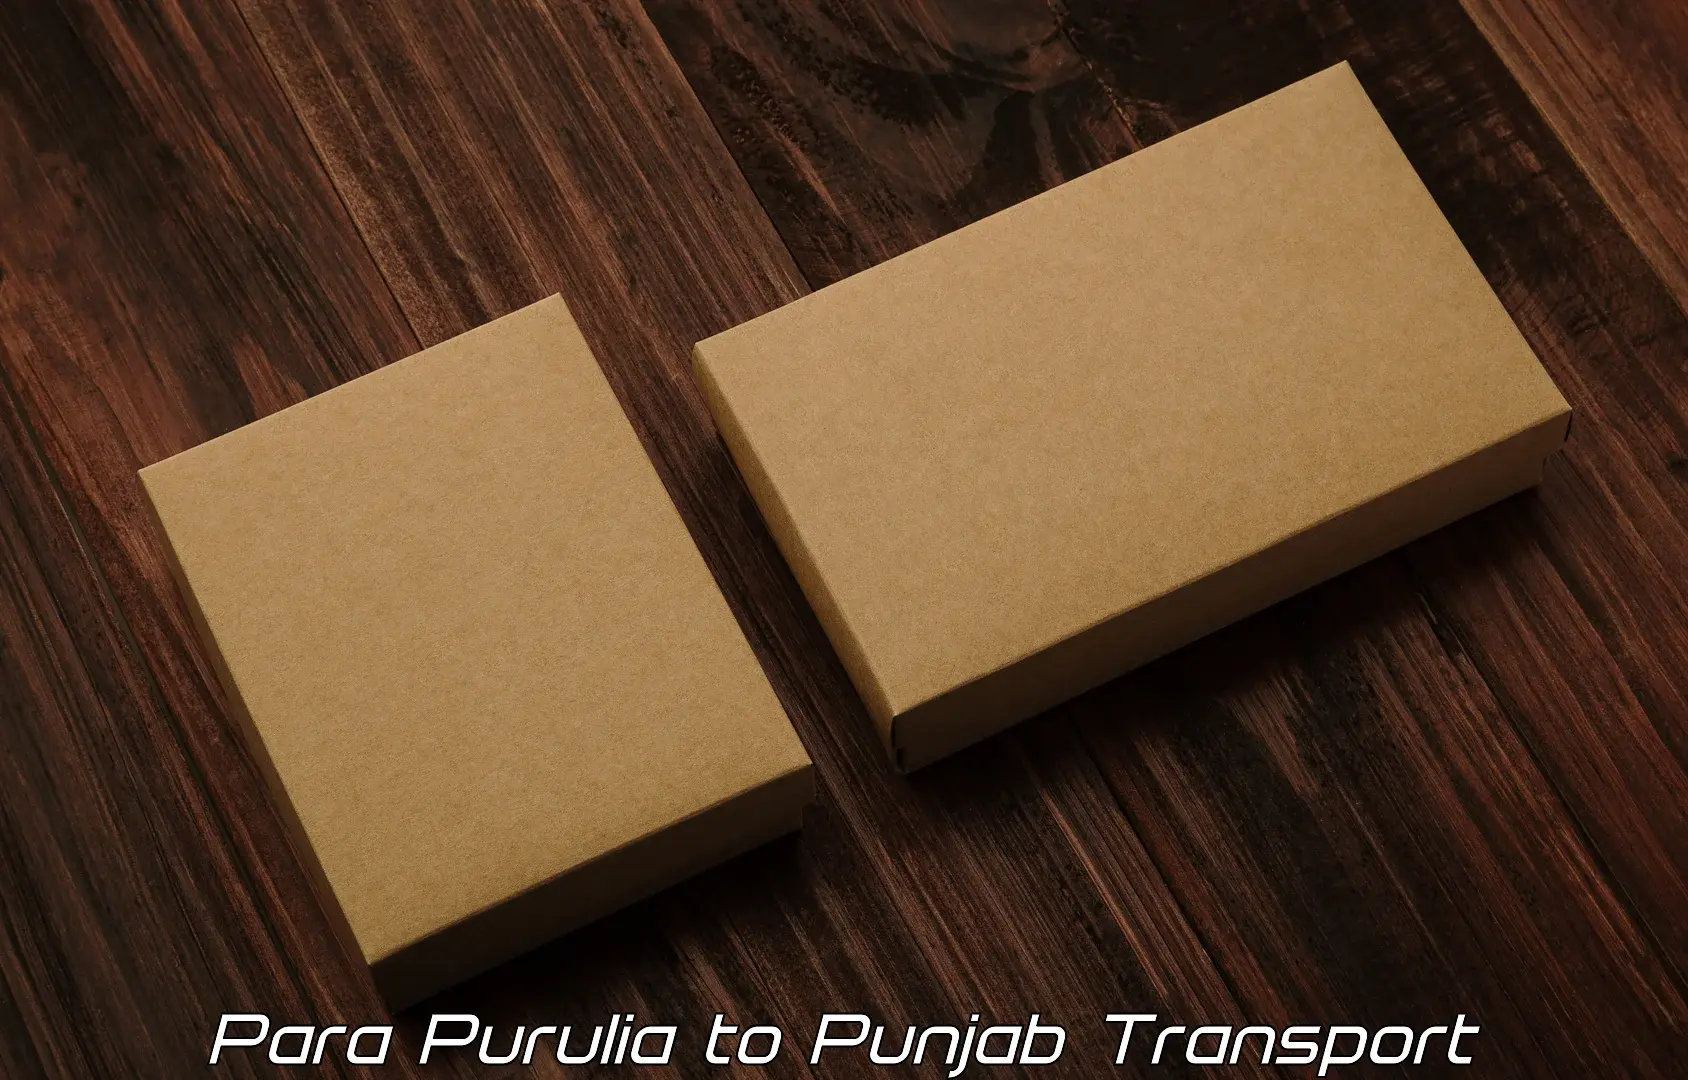 Truck transport companies in India Para Purulia to Punjab